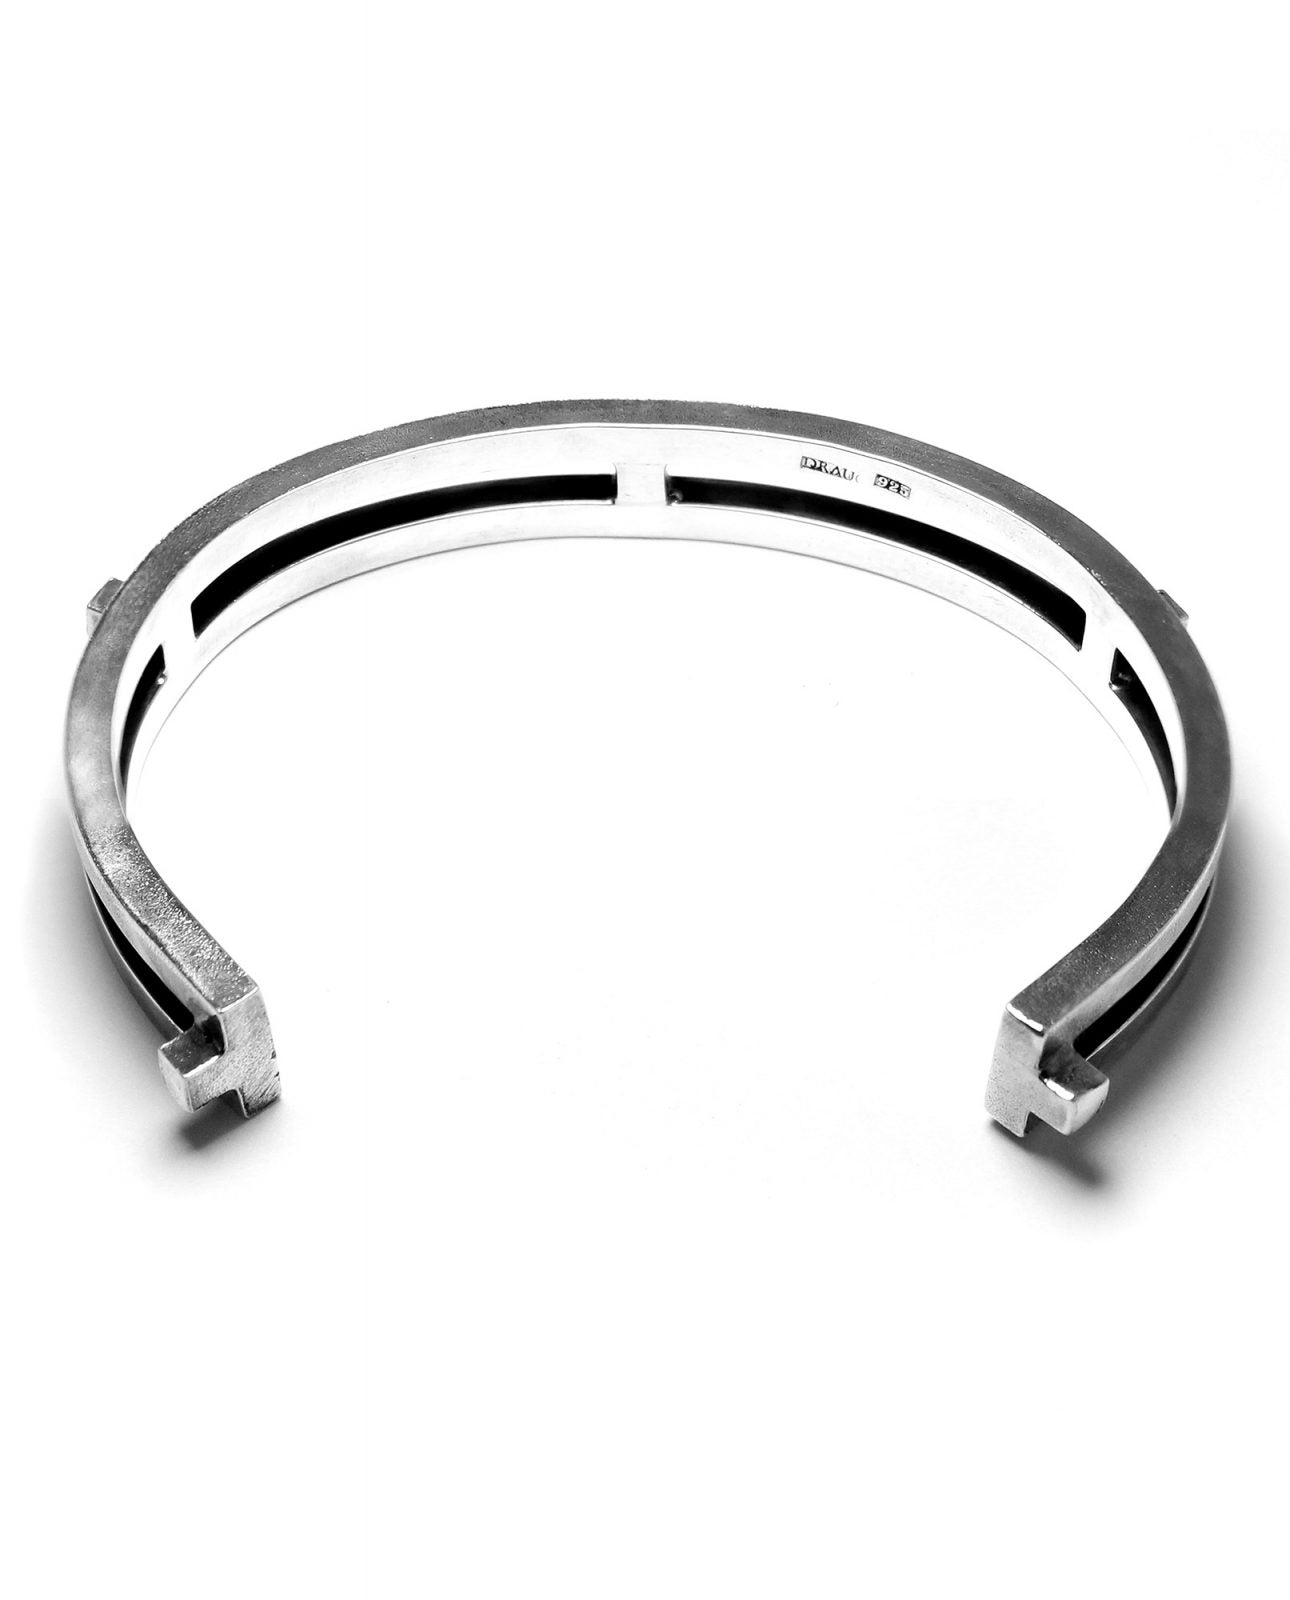 DRAUG Jewelry 925 Solid Silver Module Cuff